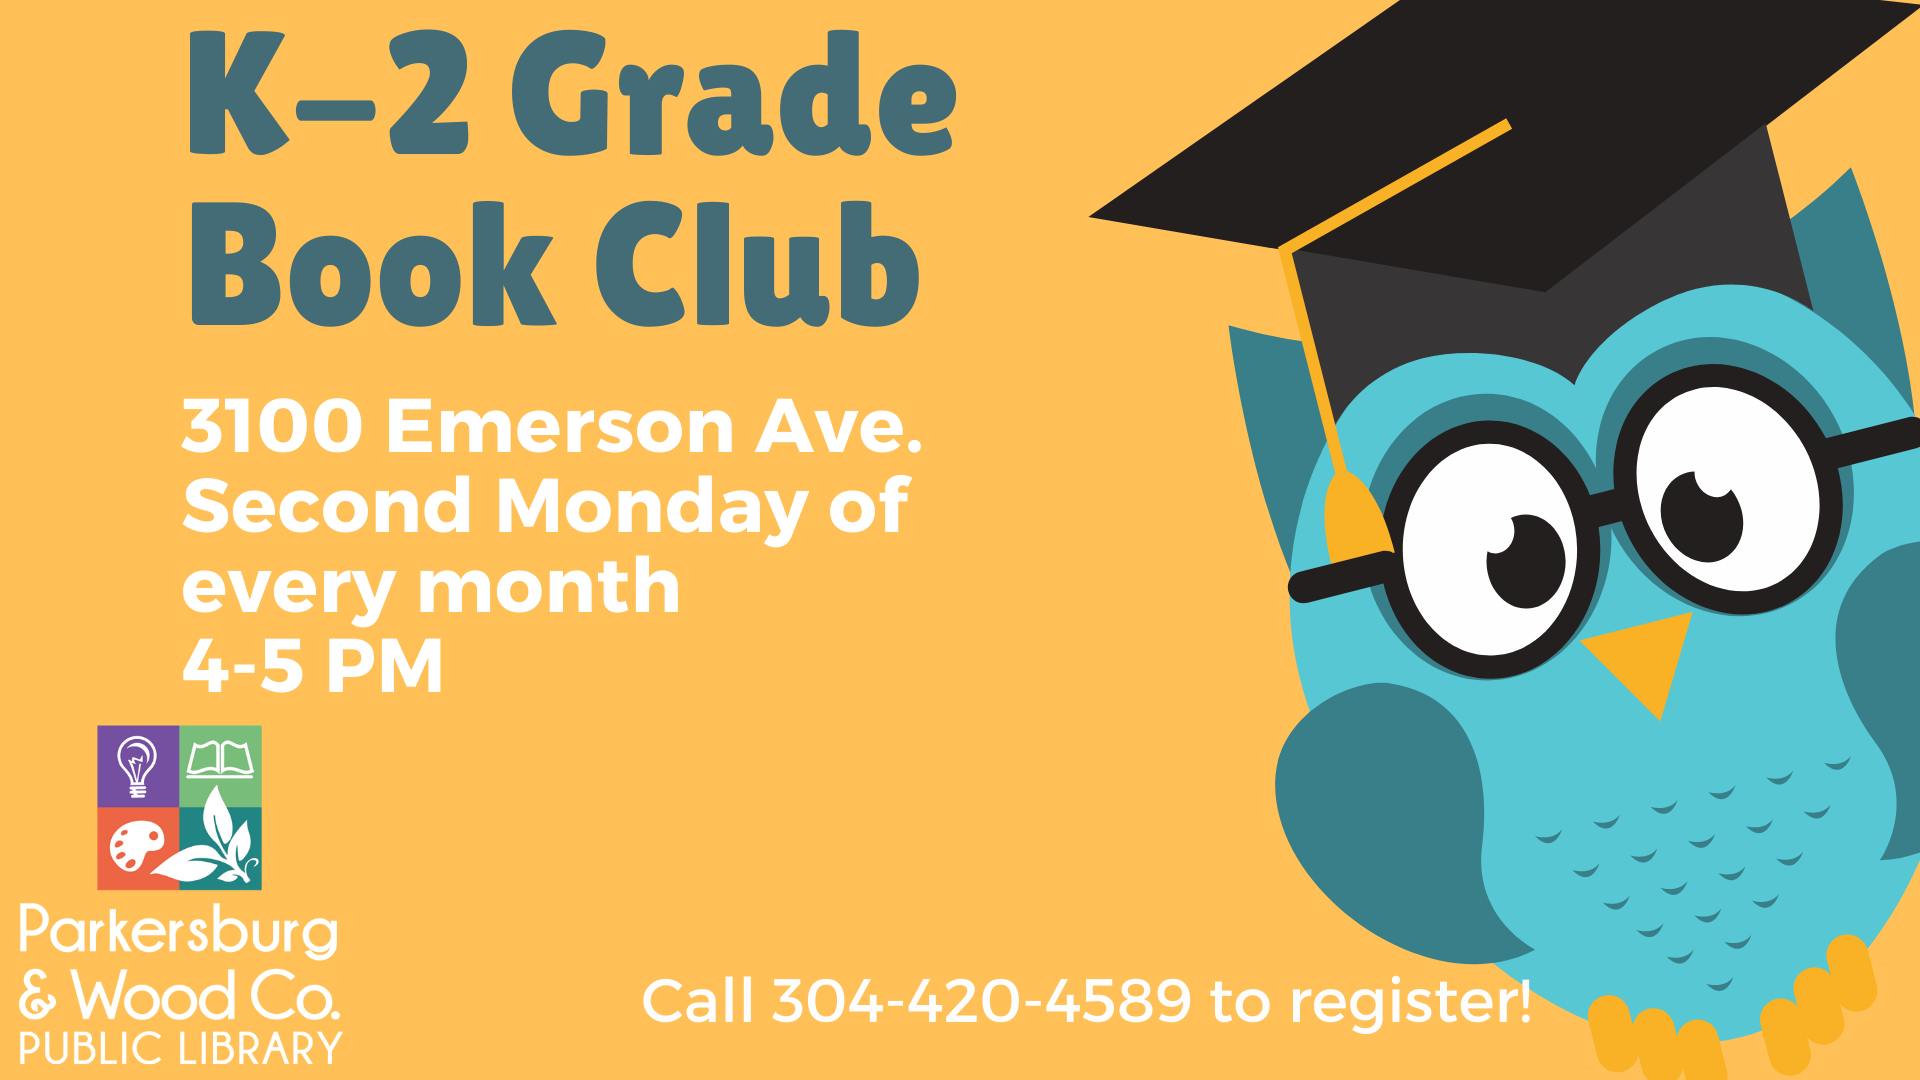 K – 2 Grade Book Club at Emerson